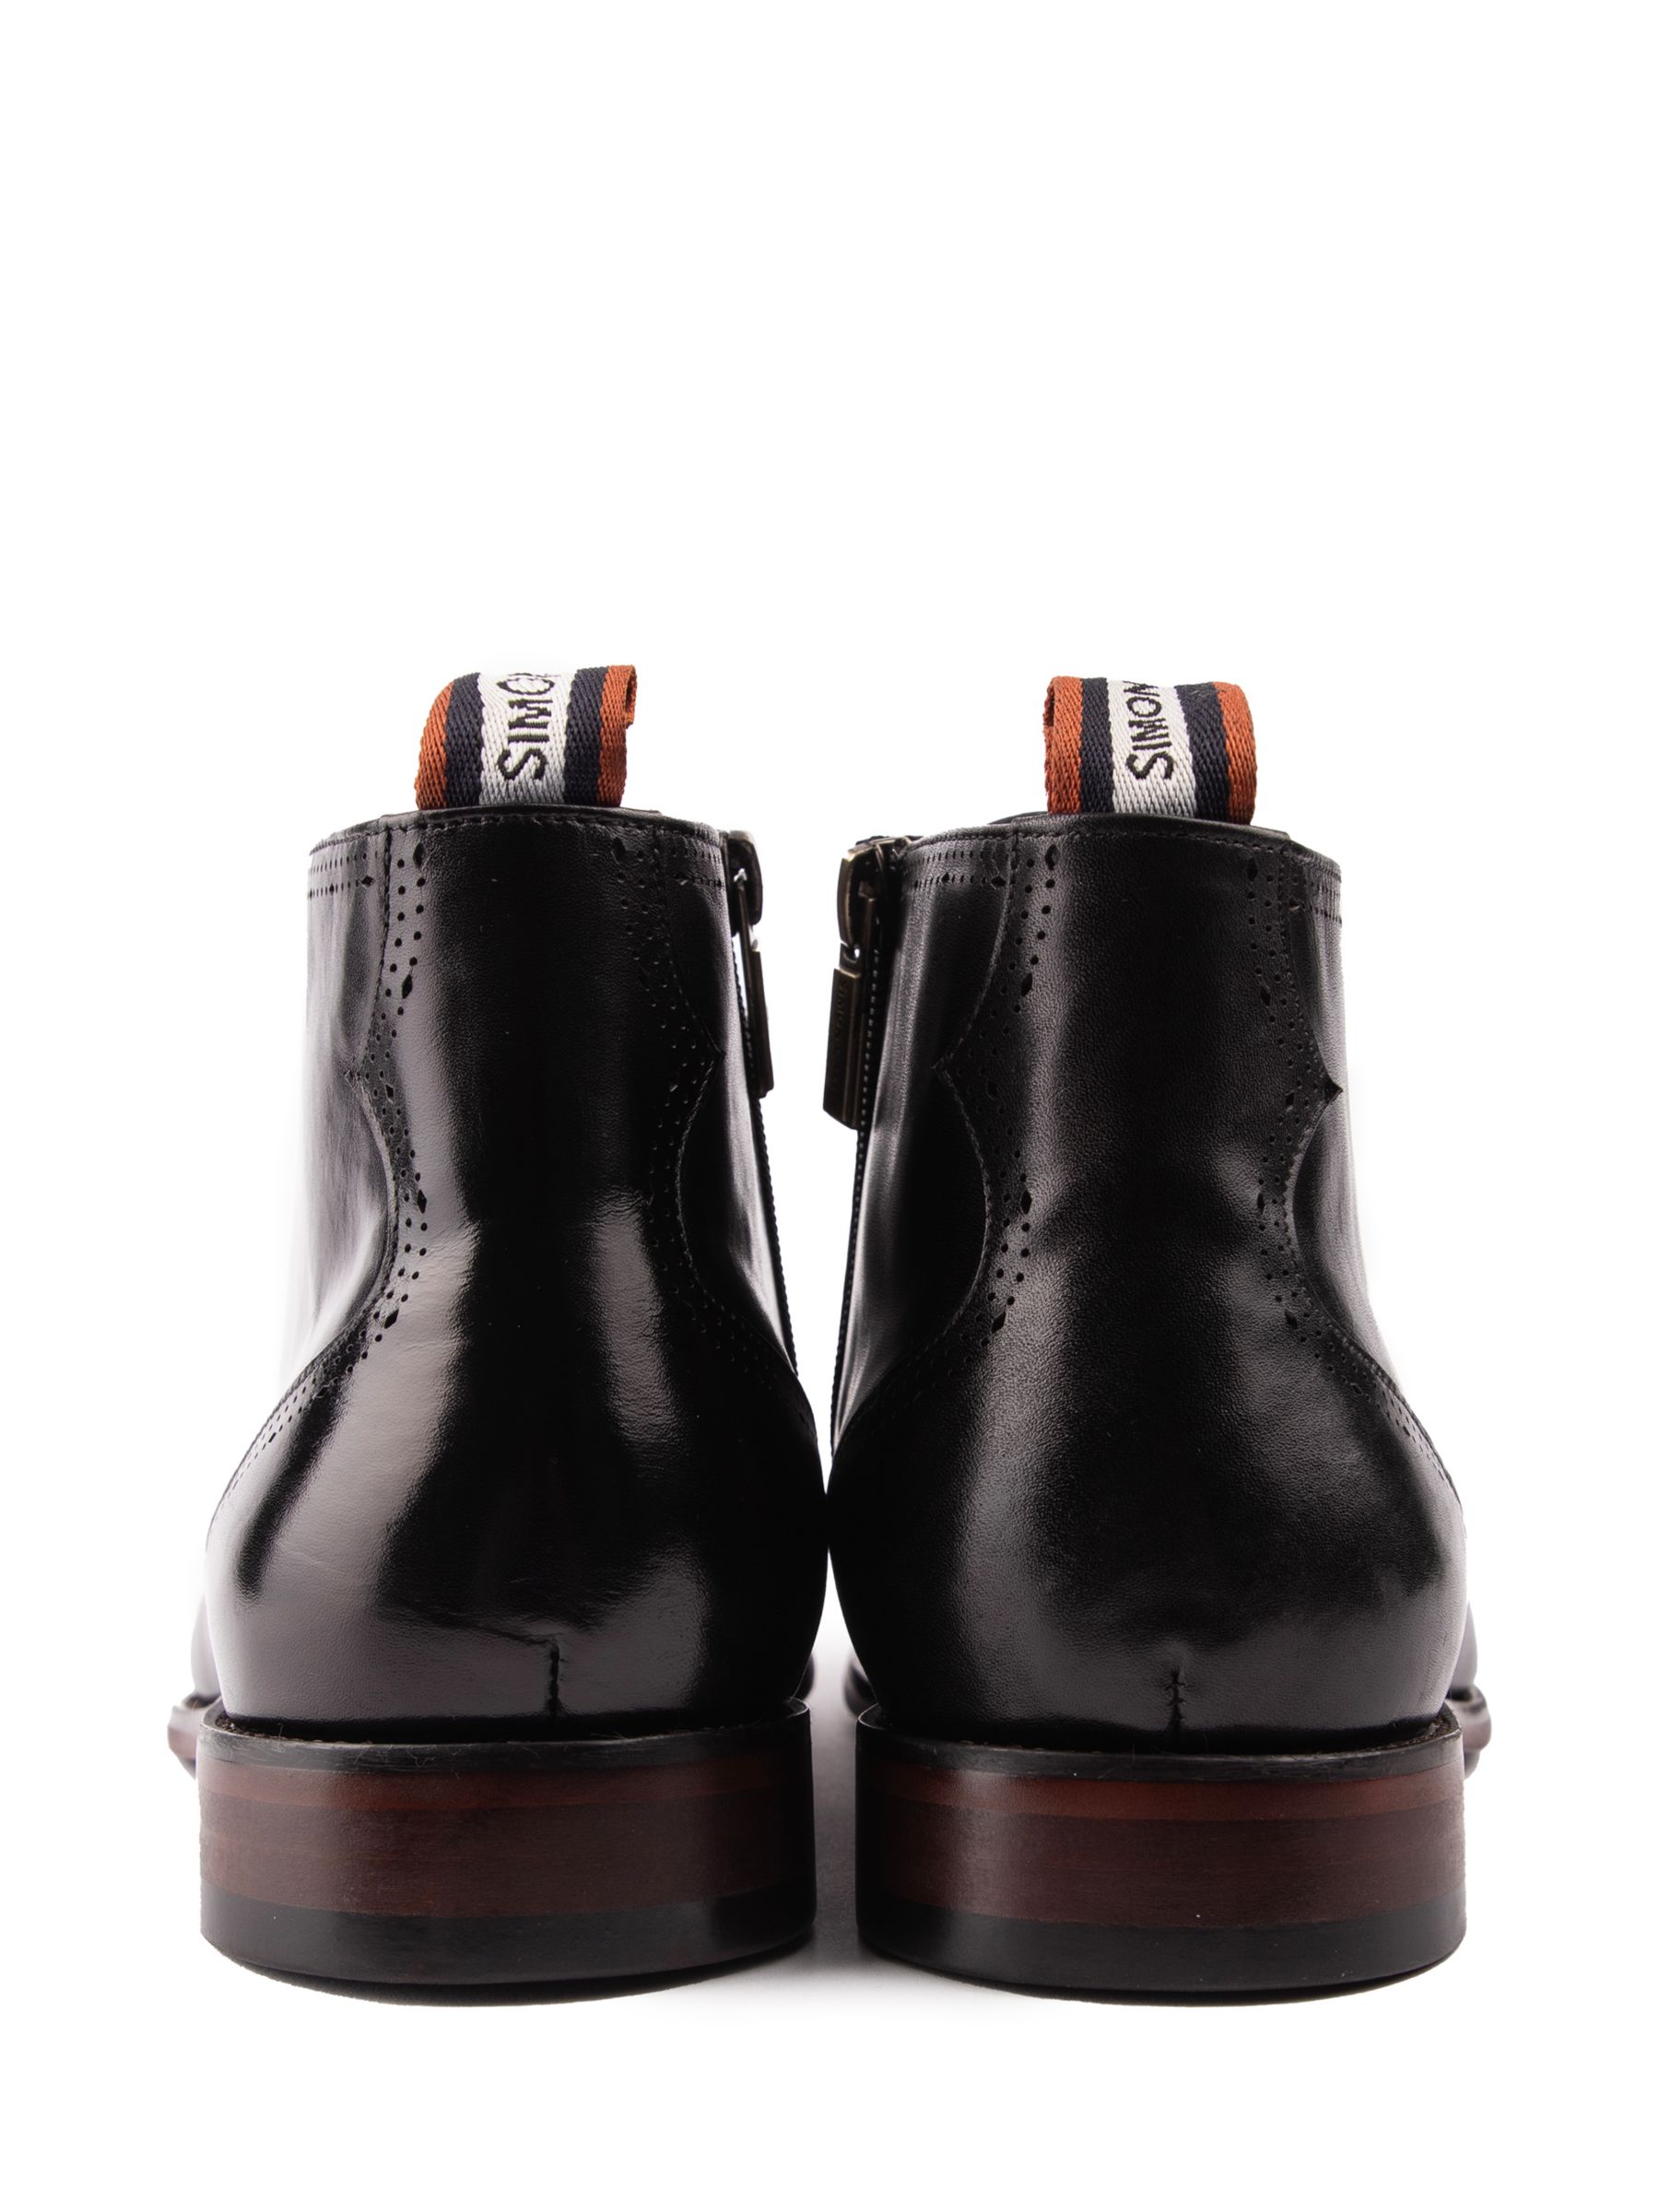 Simon Carter Whisker Leather Chukka Boots, Black, 9